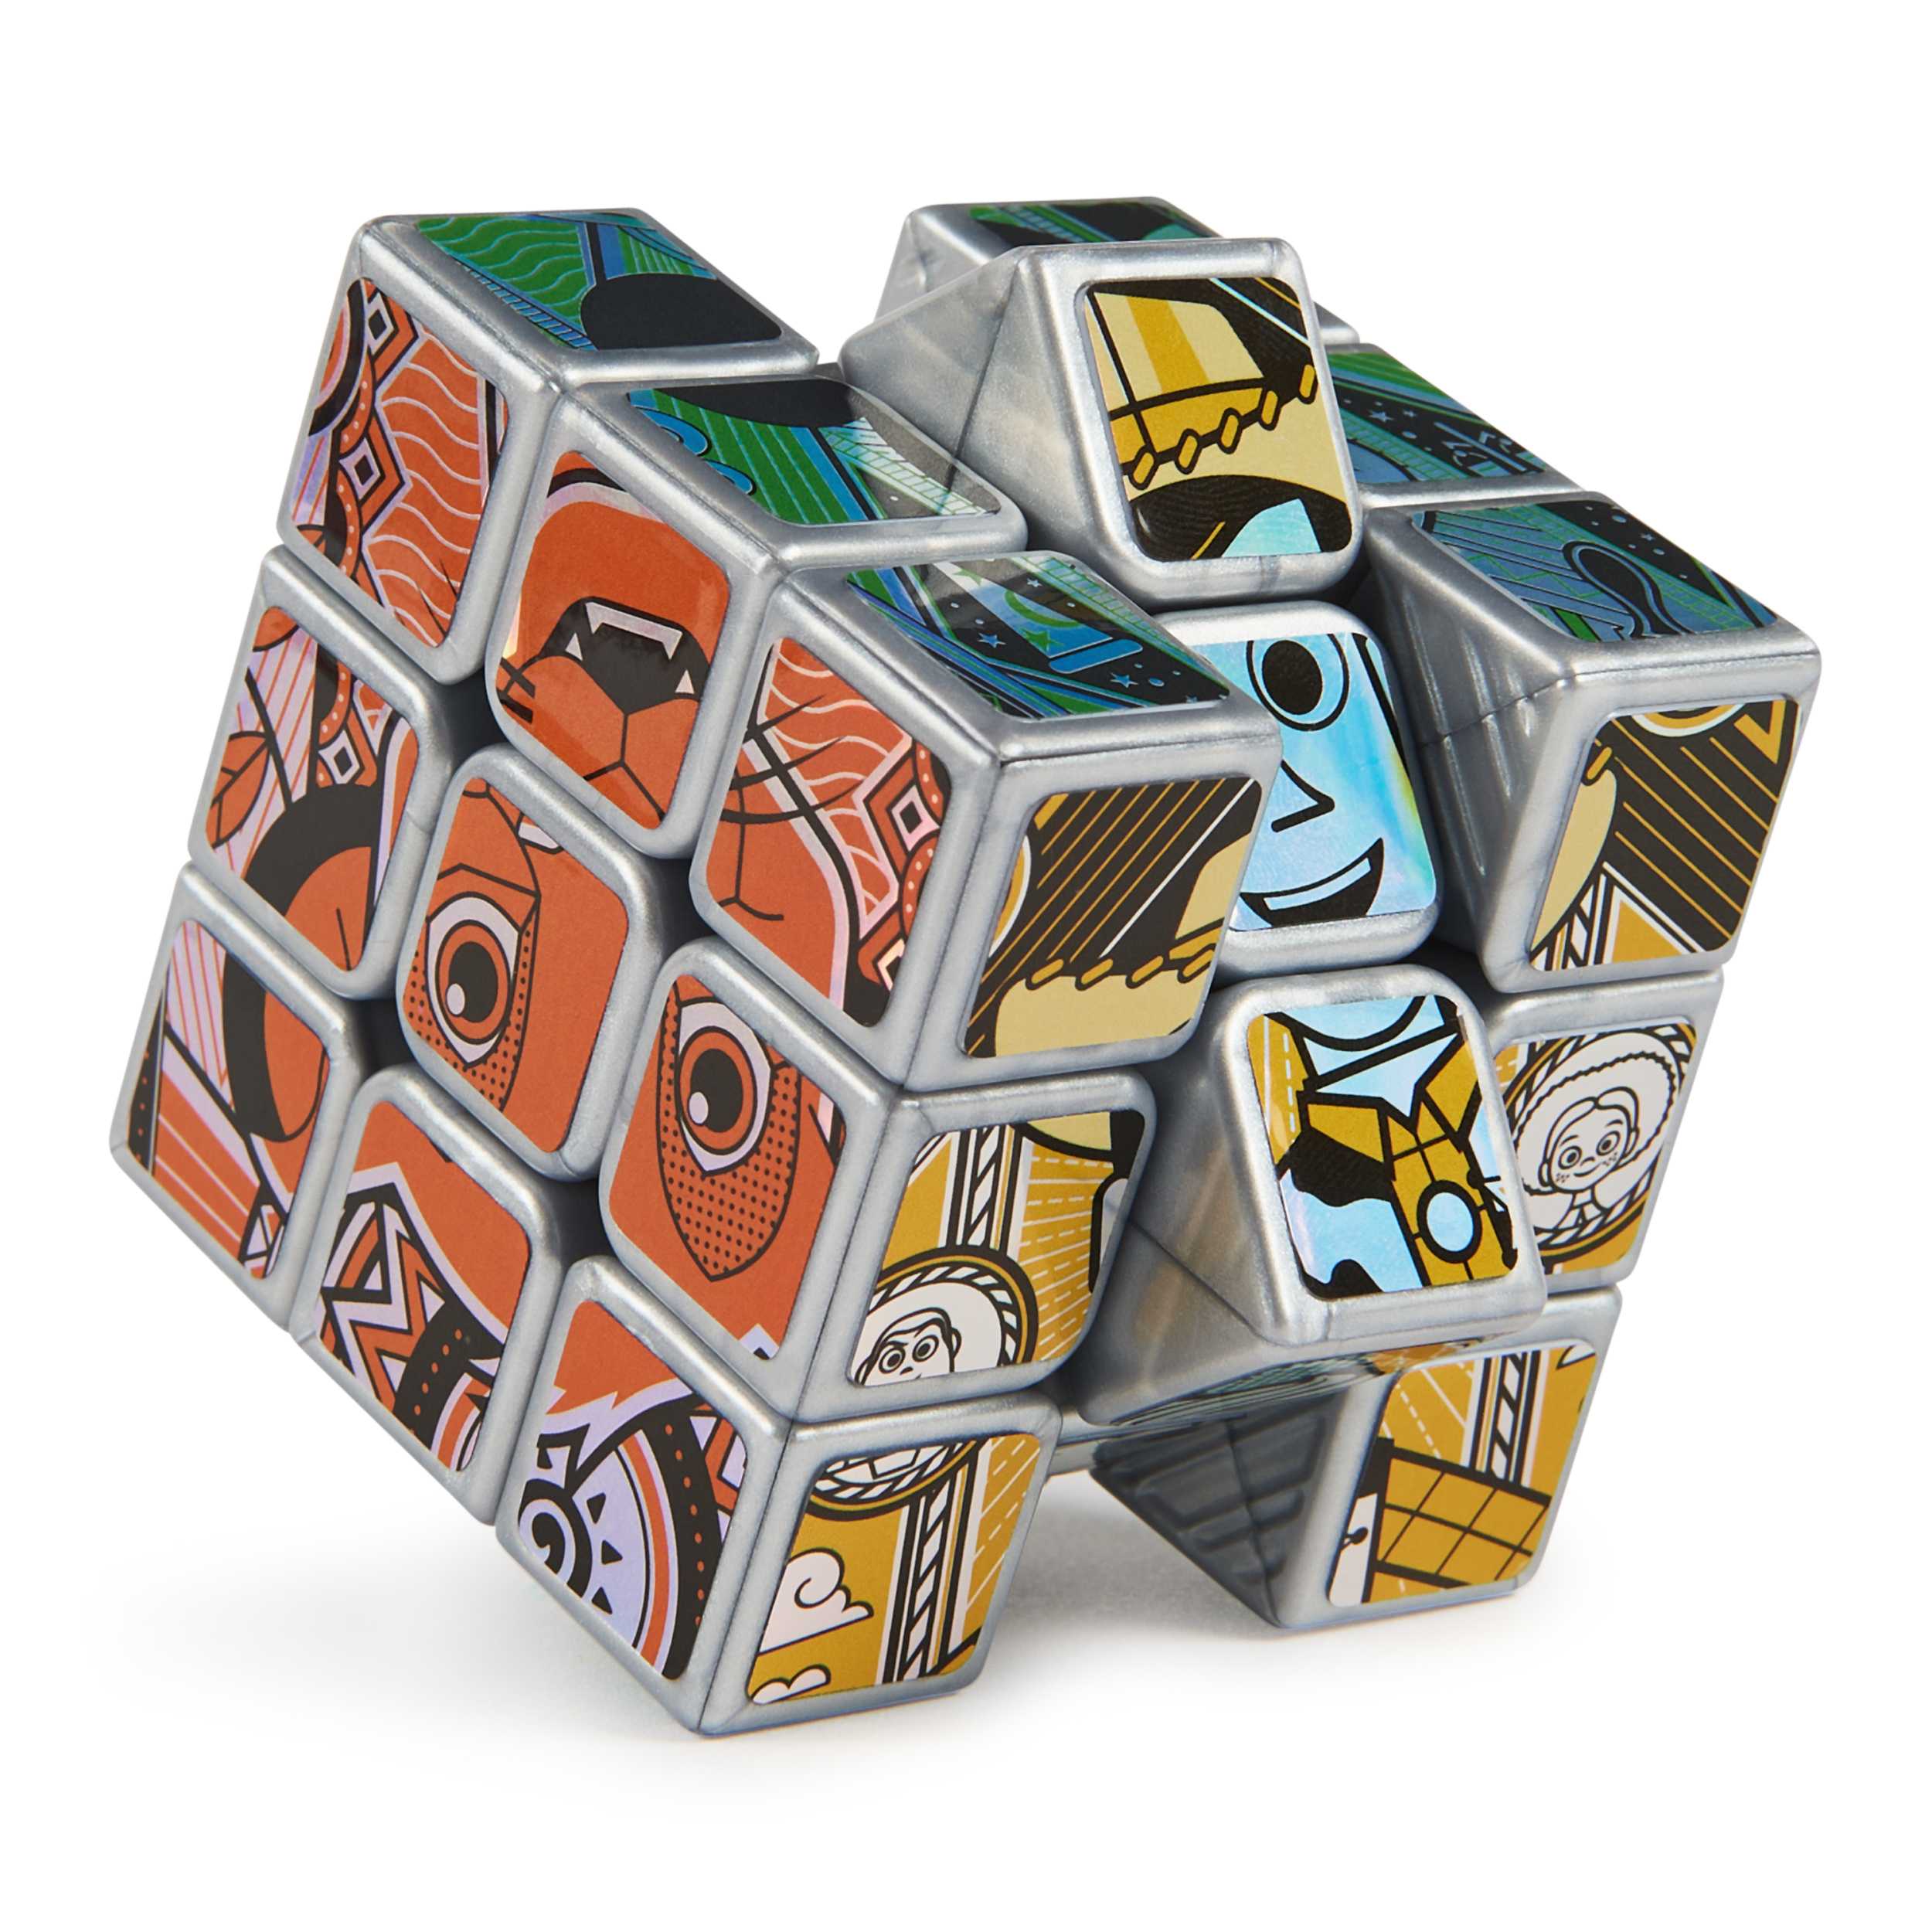 Mythical Rubik's Cube